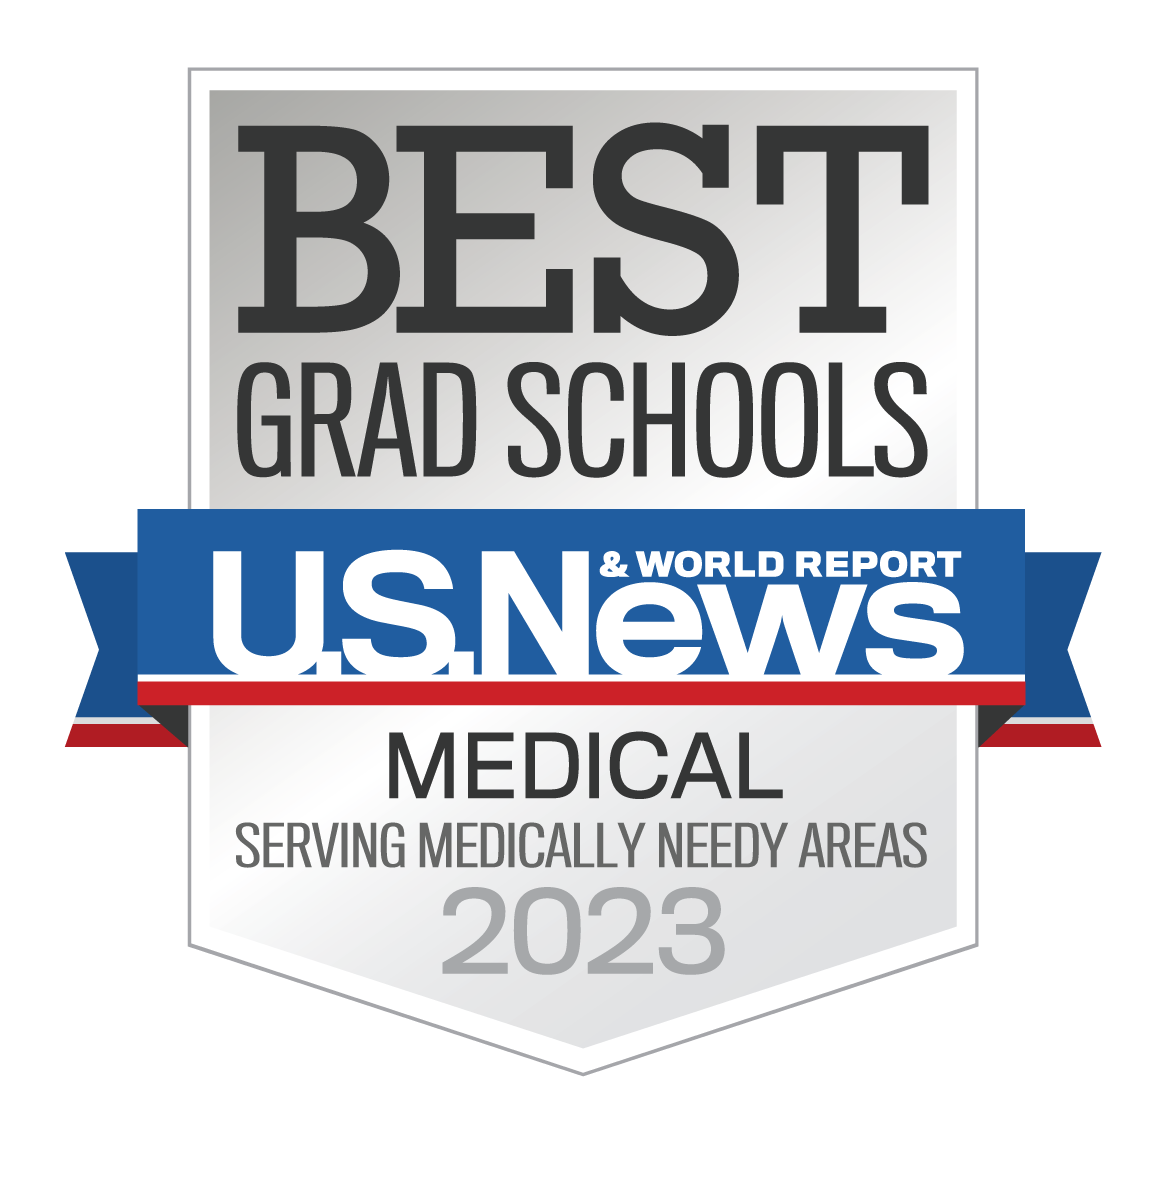 U.S. News Best Gradschools Medical Serving Medical Needy Areas 2023